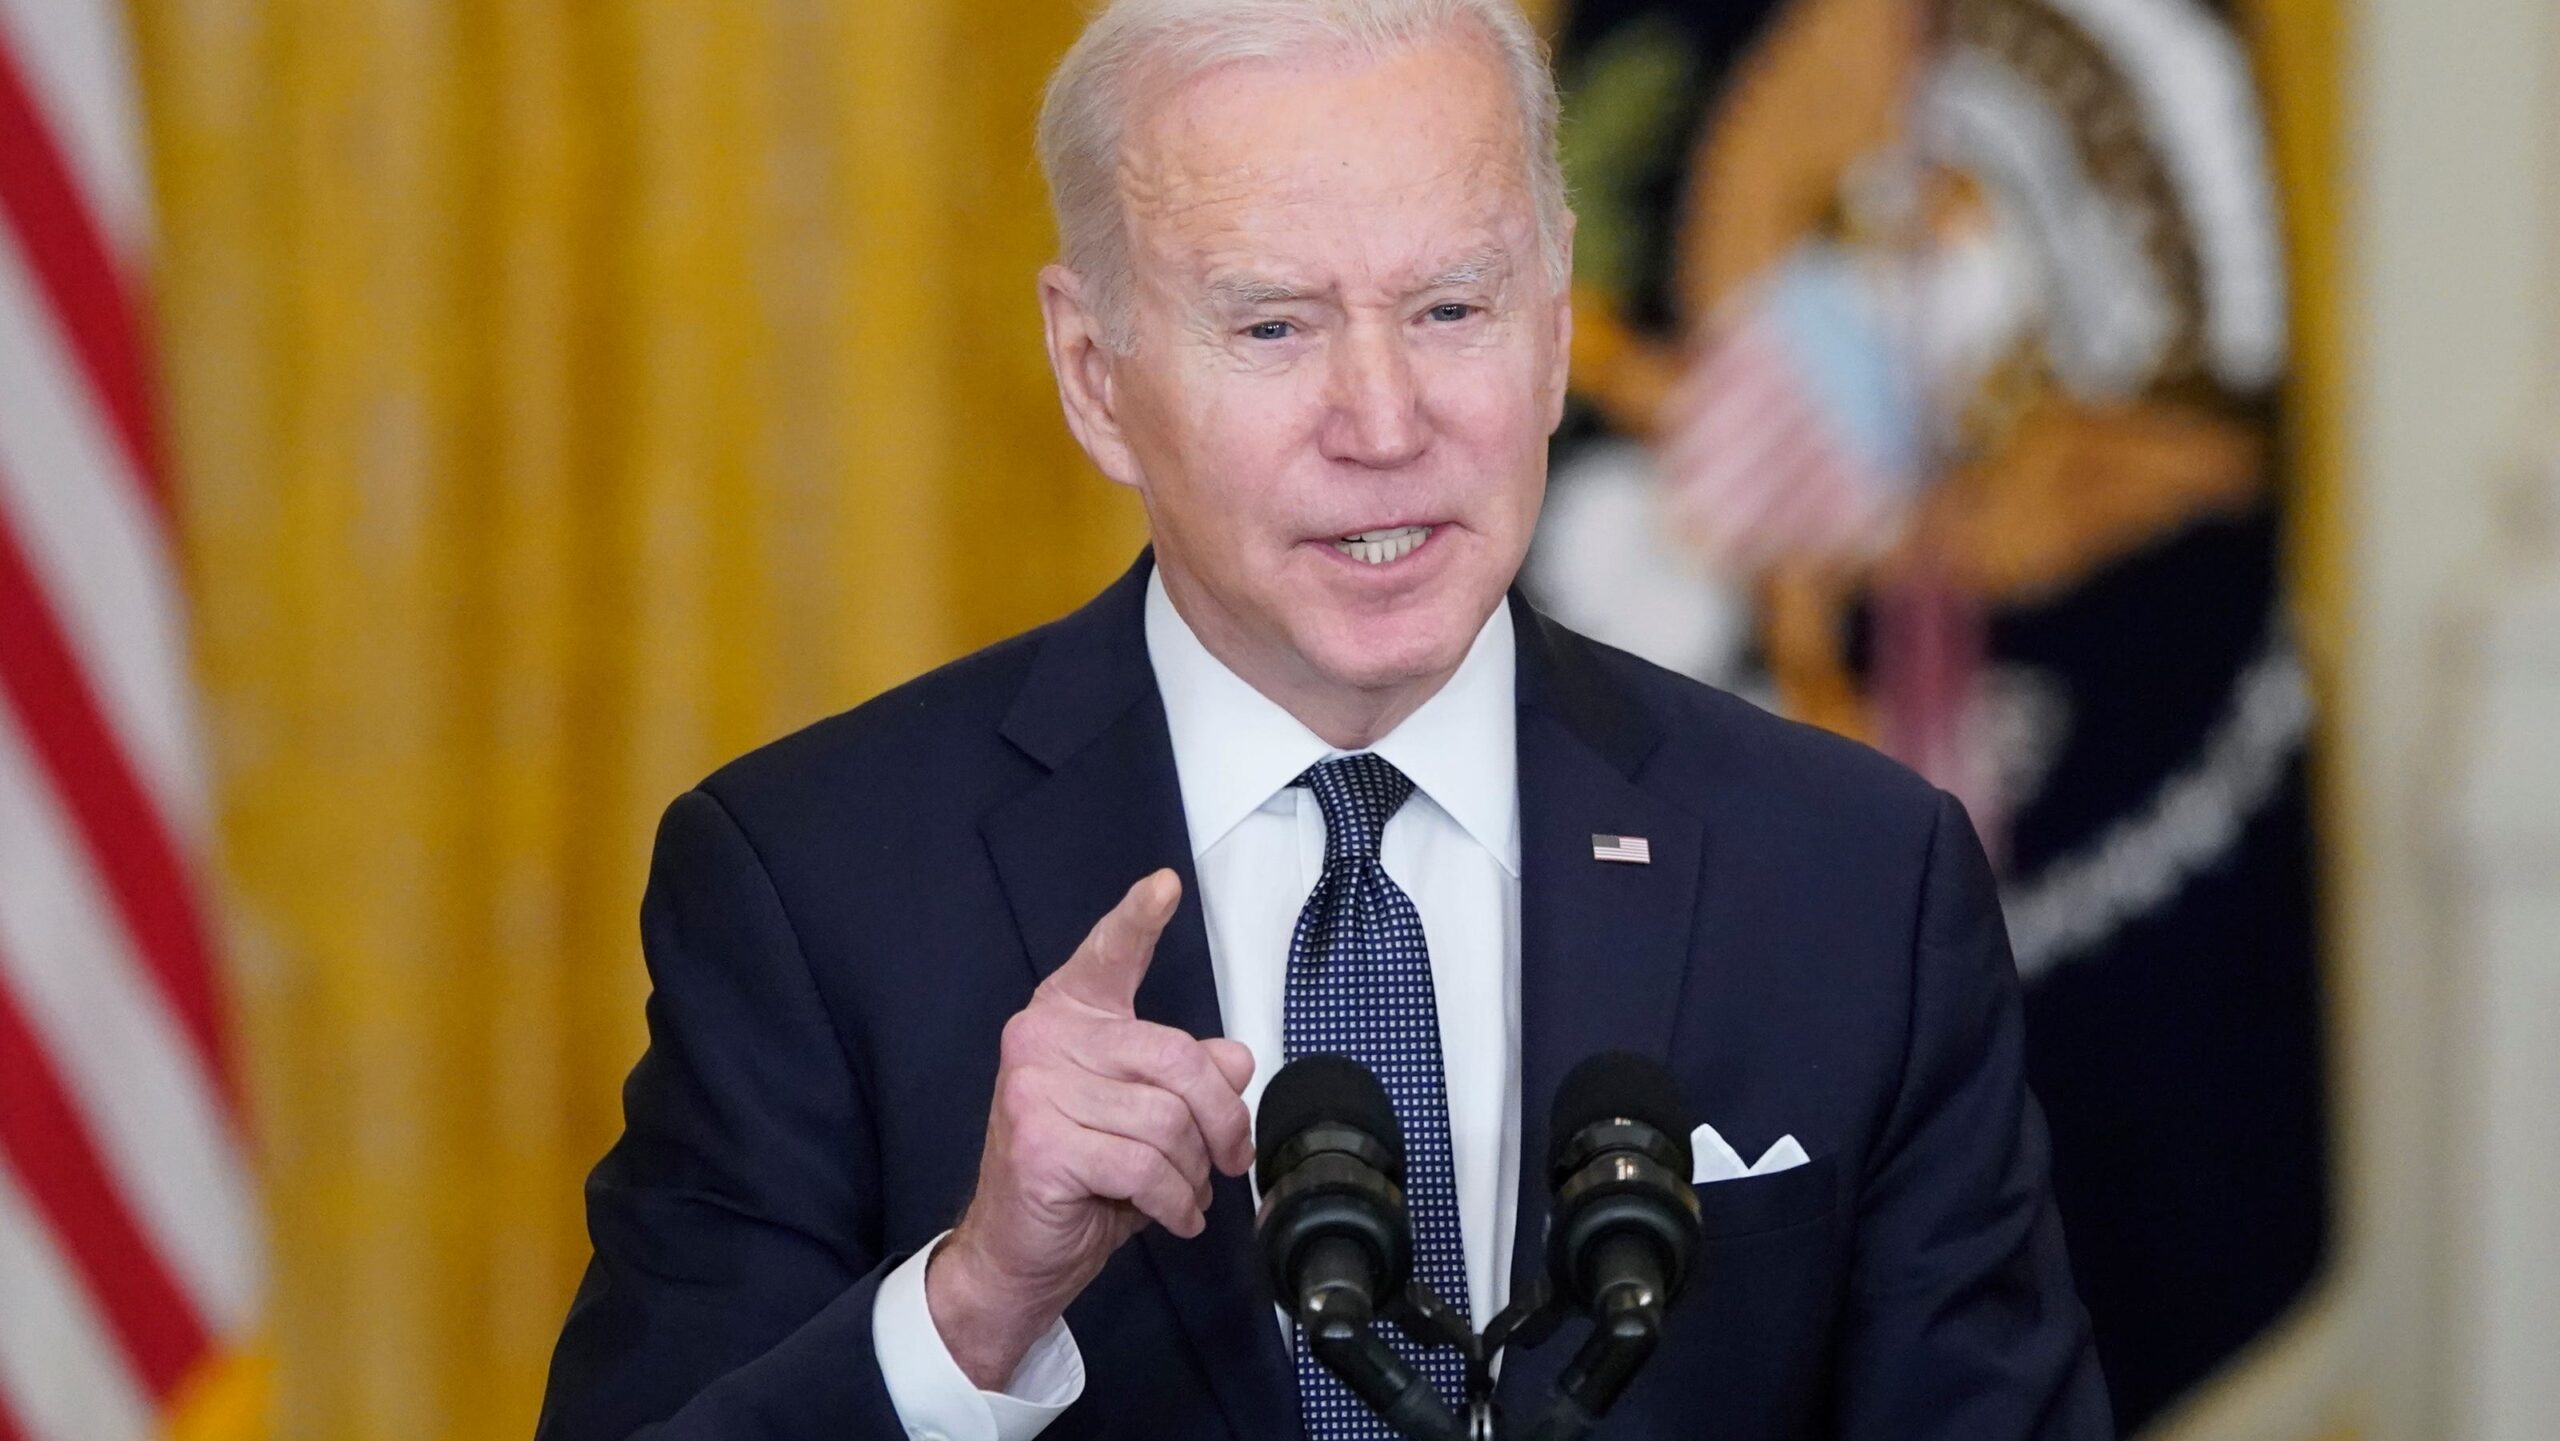 Ukraine hit by cyberattack, Joe Biden’s warning to Russia: Latest updates 